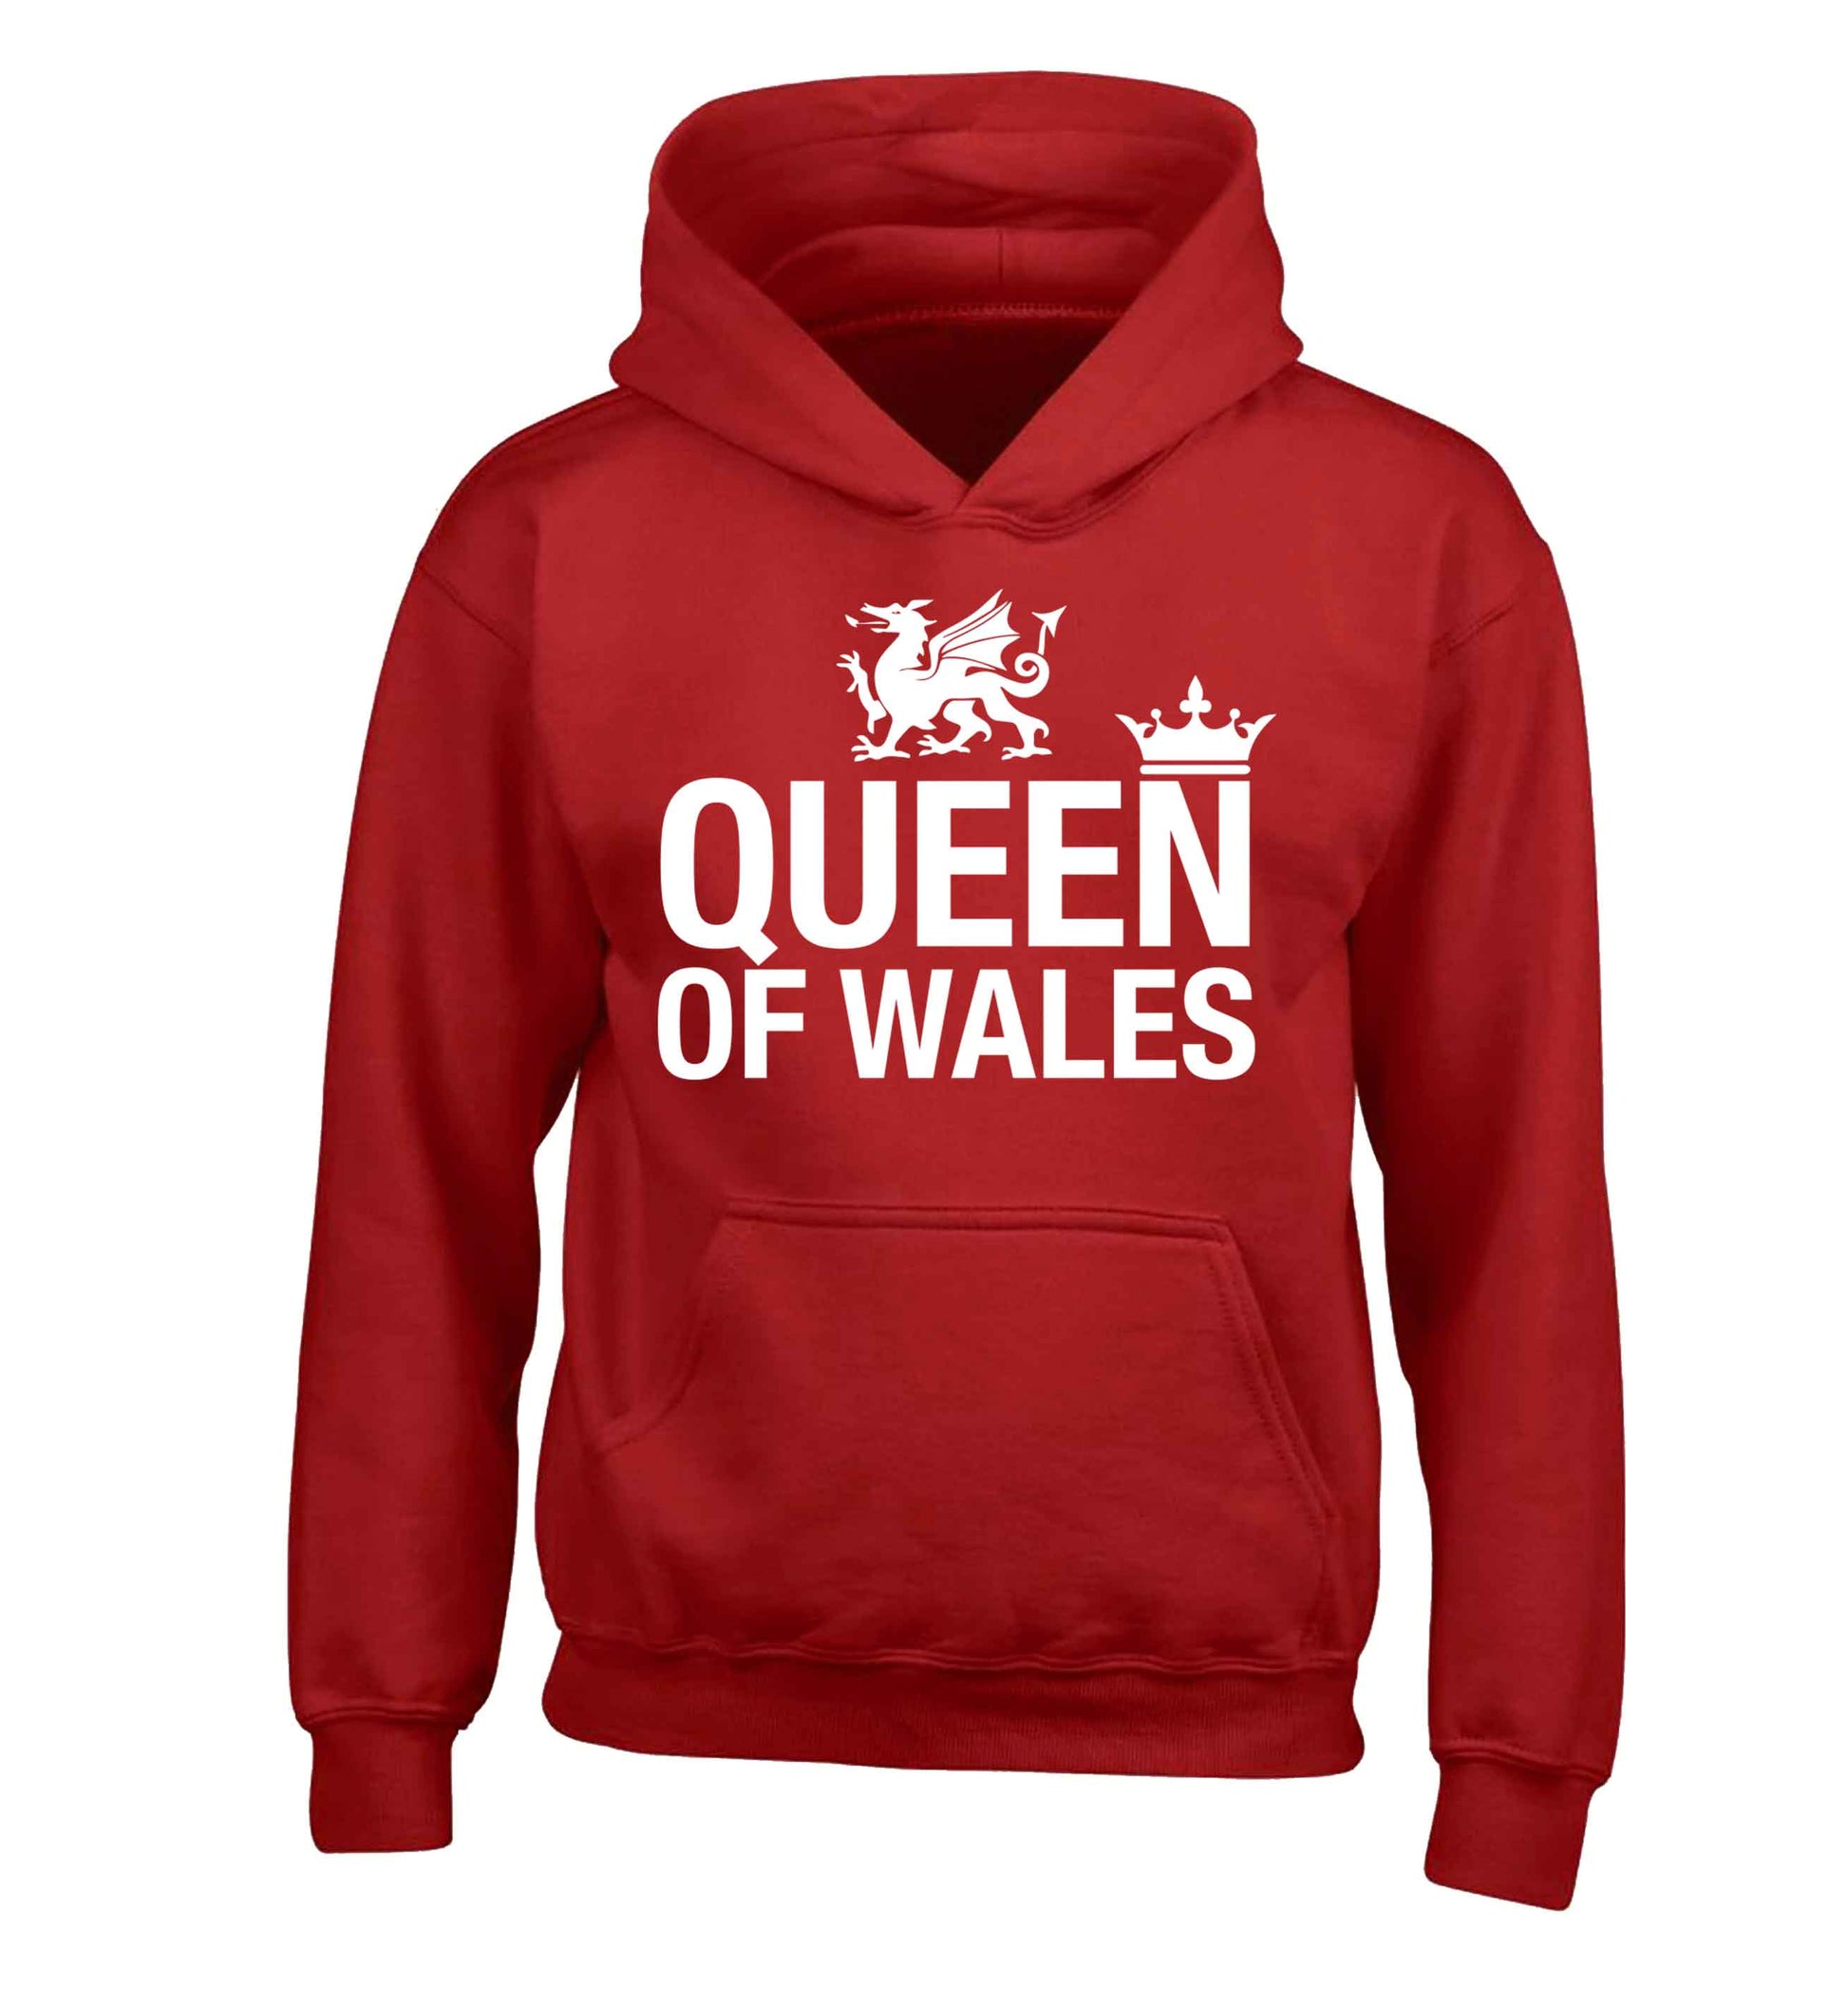 Queen of Wales children's red hoodie 12-13 Years